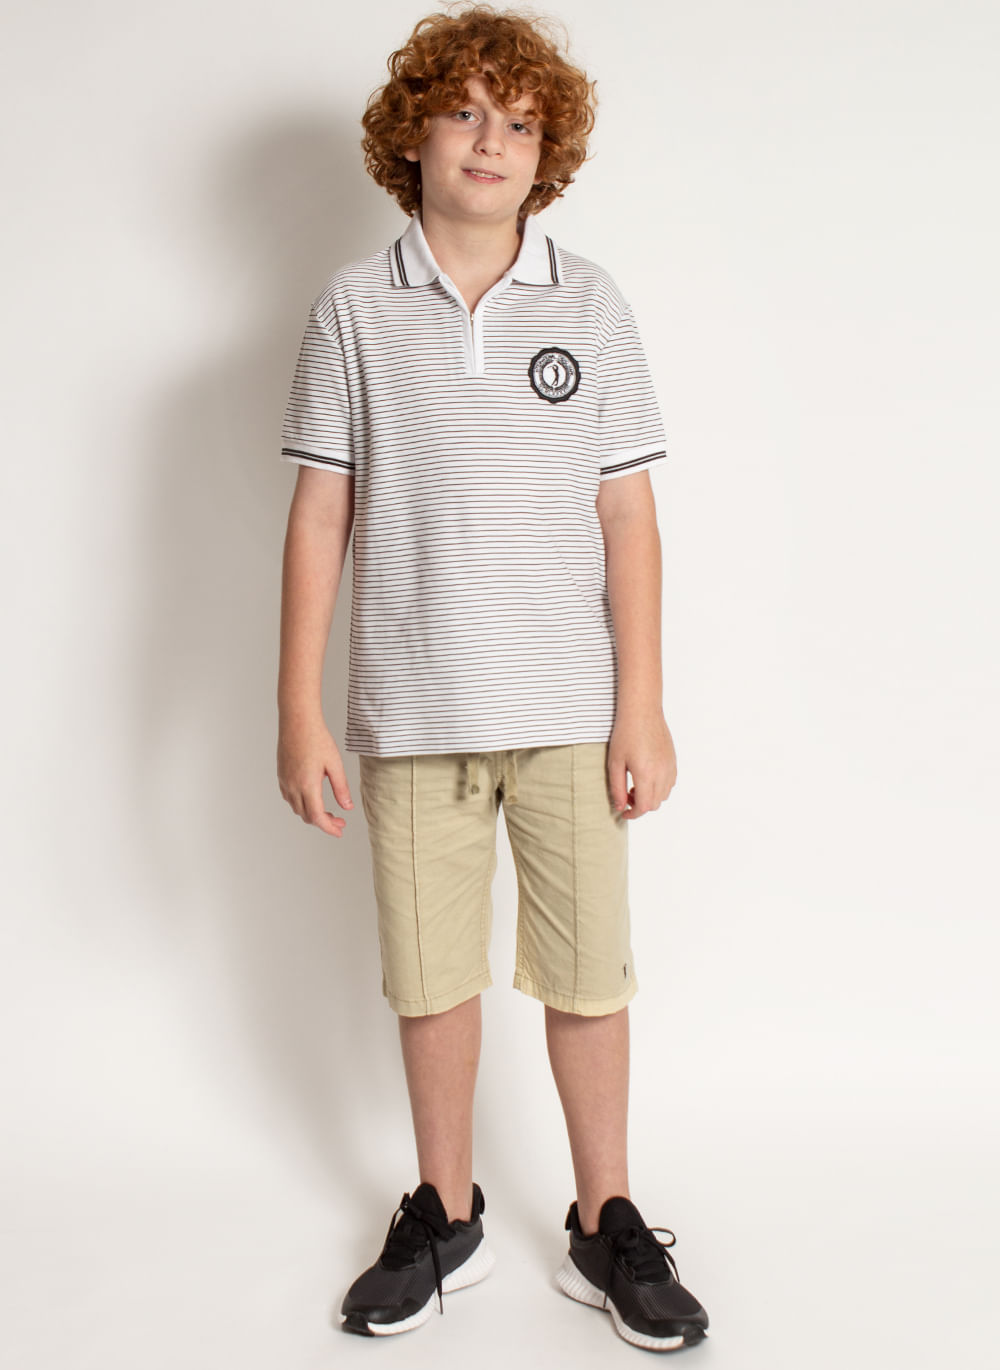 camisa-polo-aleatory-infantil-patch-piquet-com-ziper-modelo-2020-5-